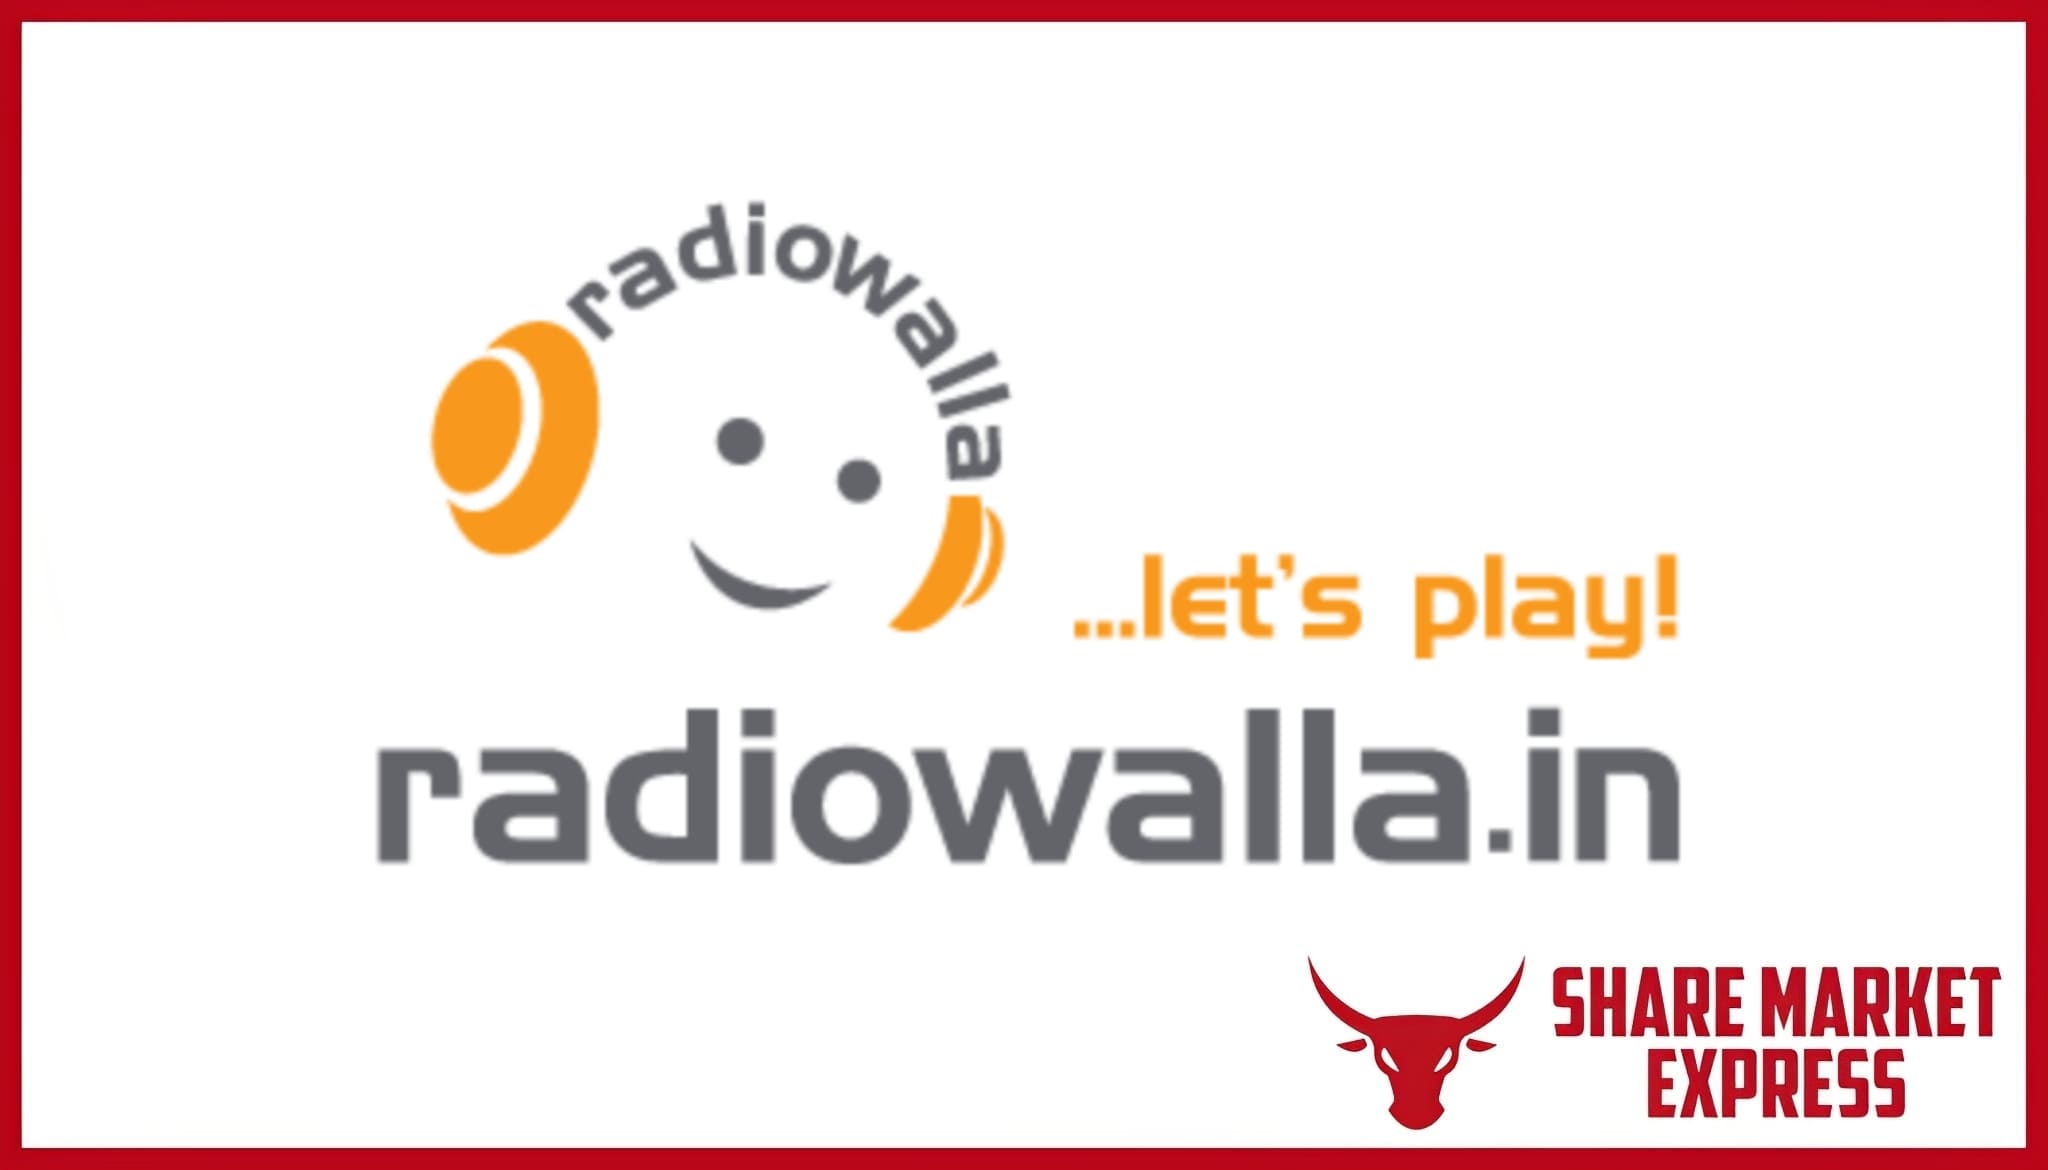 Radiowalla Network IPO